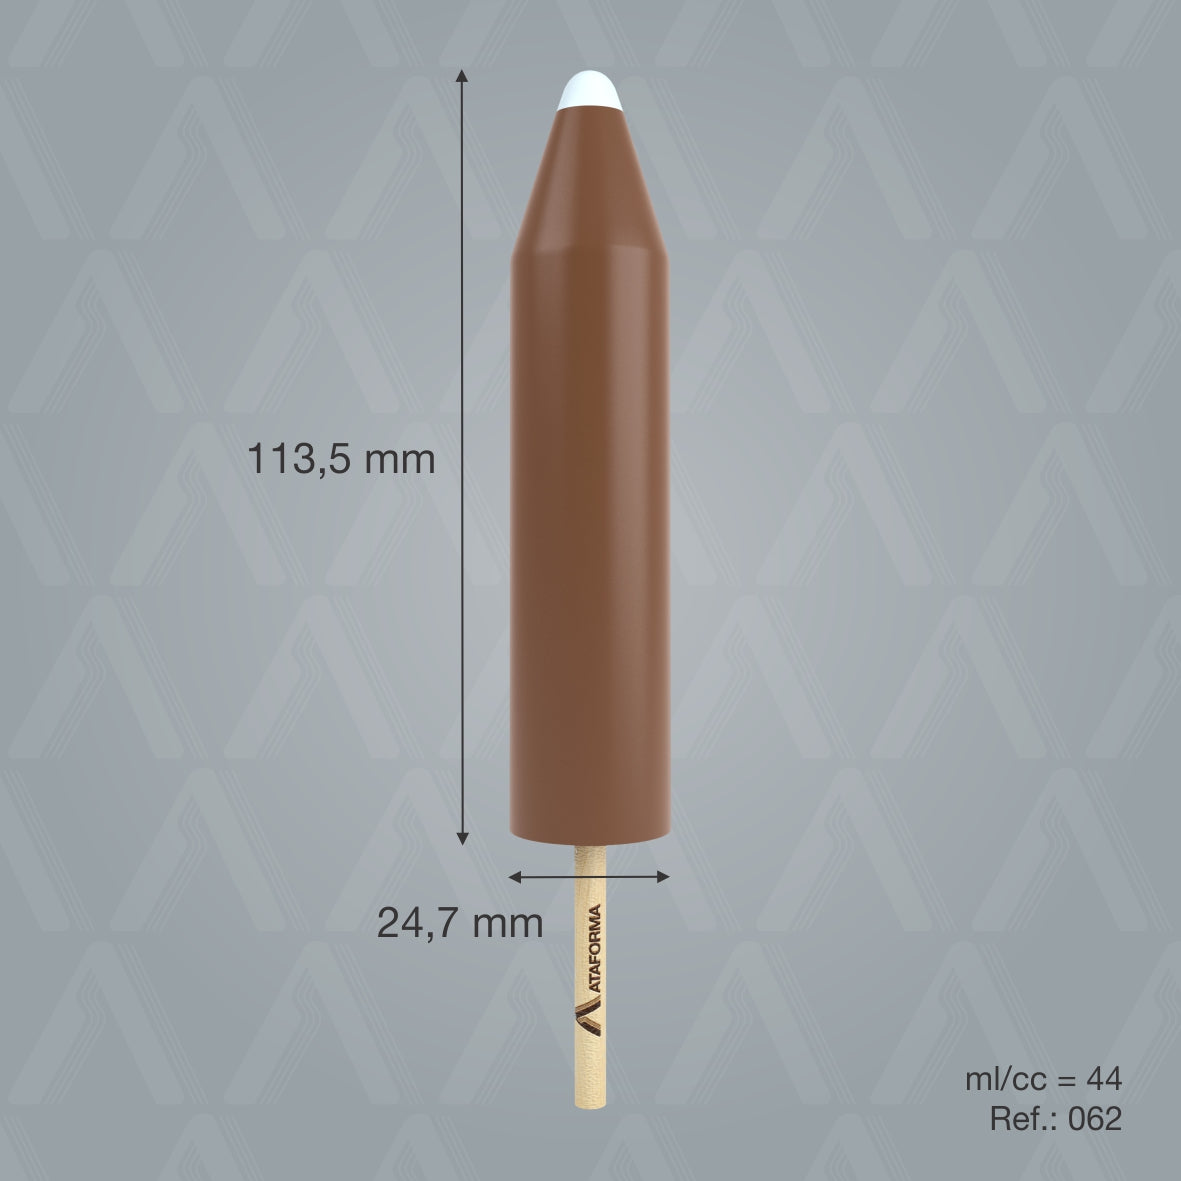 Ataforma Mold Lápis 44ml 1.5 oz 22 cavities (7-14 molds pricing)